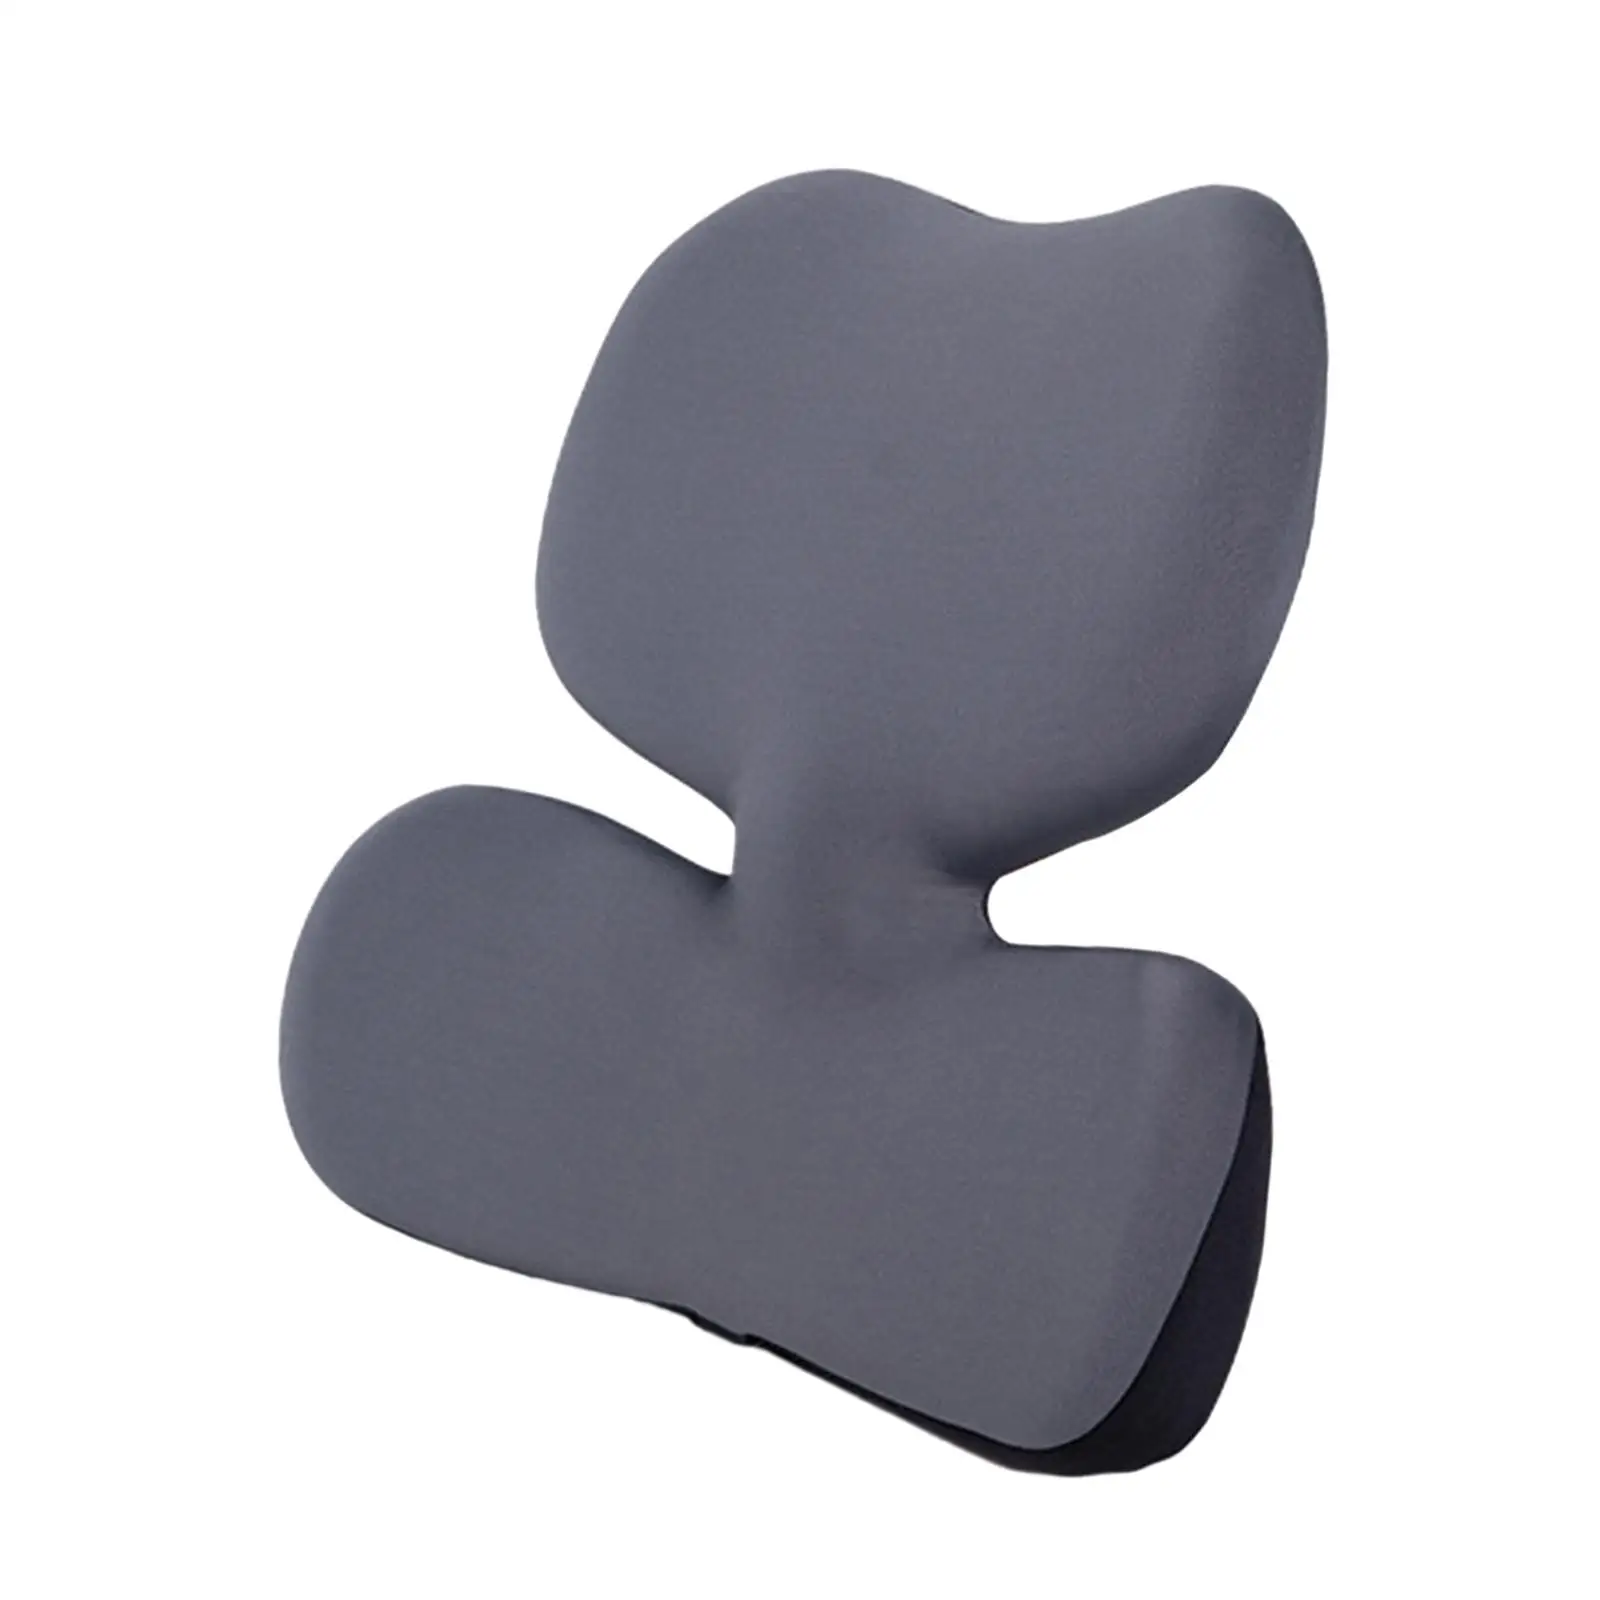 Lumbar Support Pillow Comfortable Portable Backrest Waist Cushion Waist Support Pillow for Travel Dorm Car Gaming Chair Office